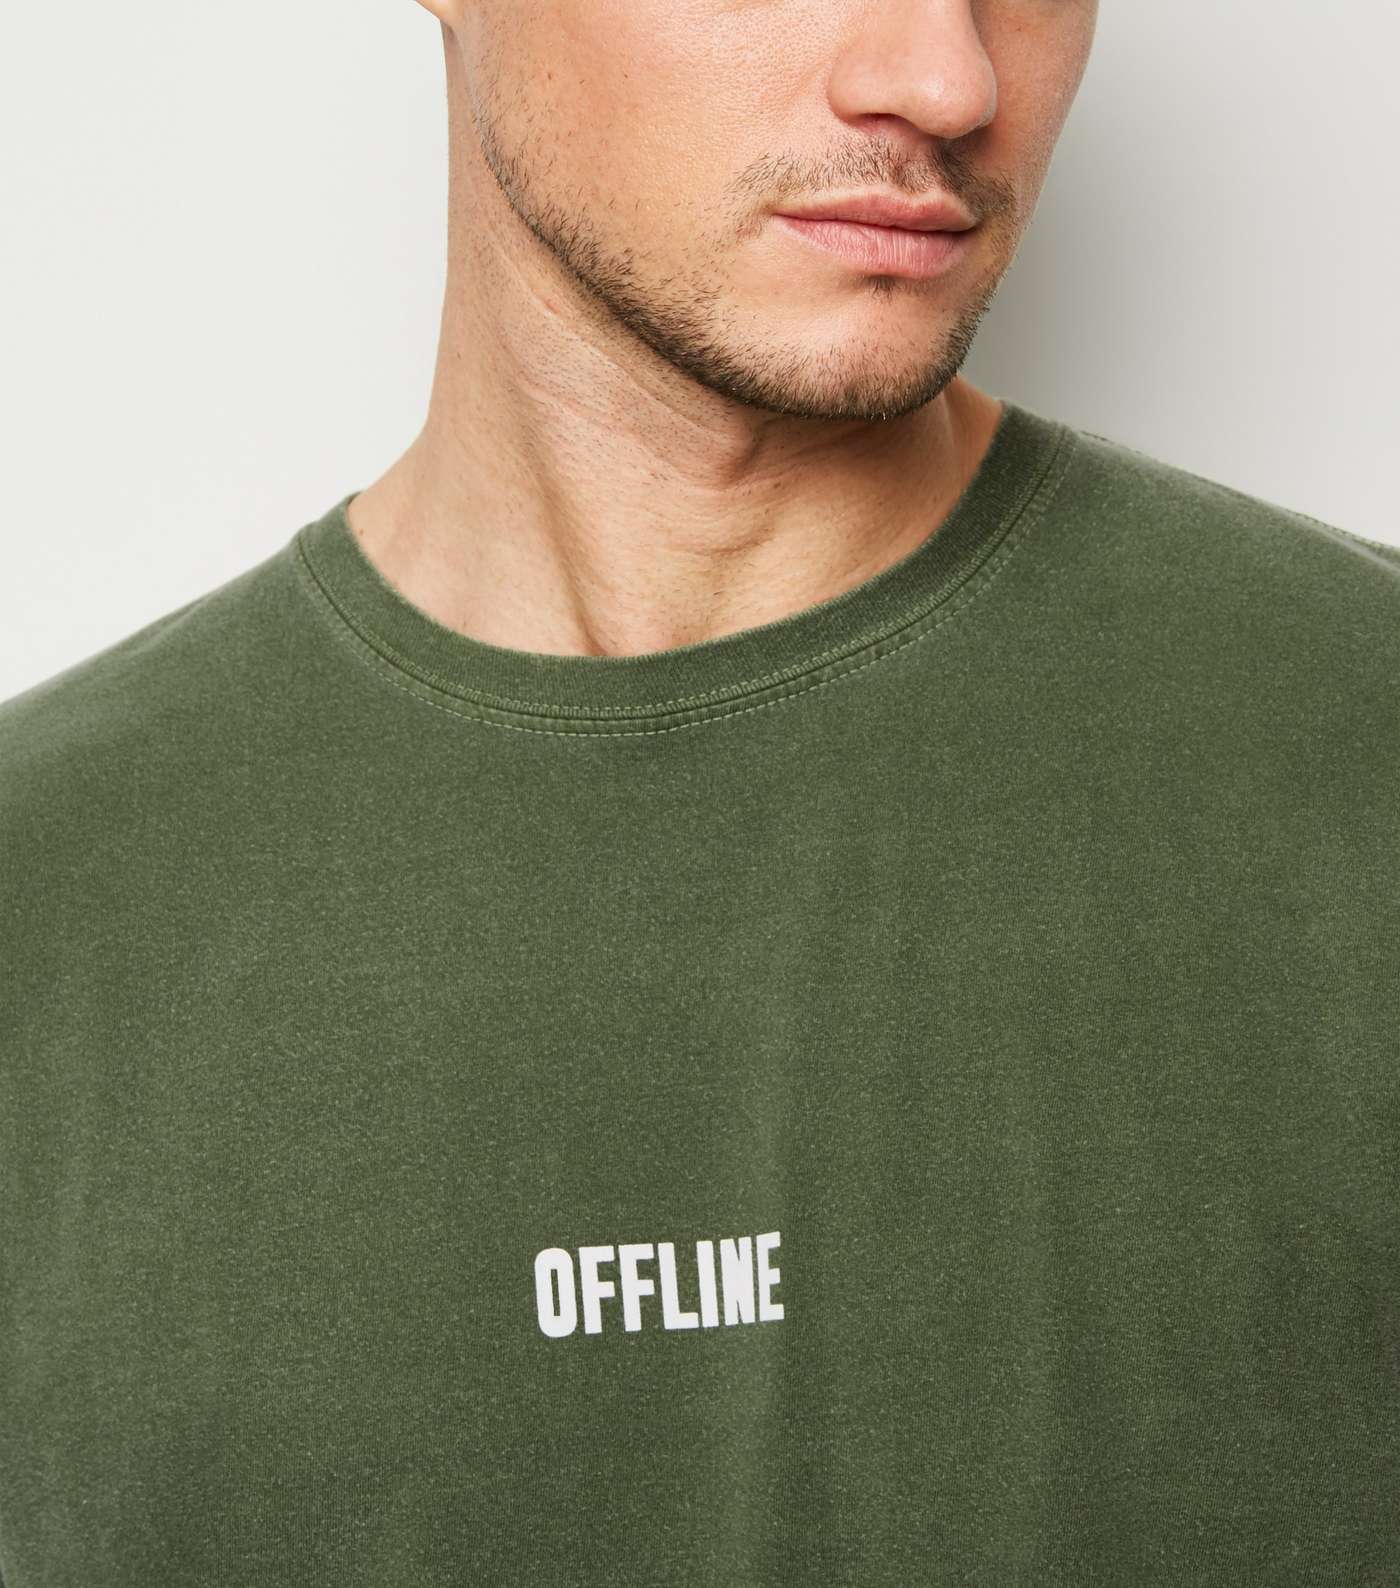 Green Overdyed Offline Slogan T-Shirt Image 5